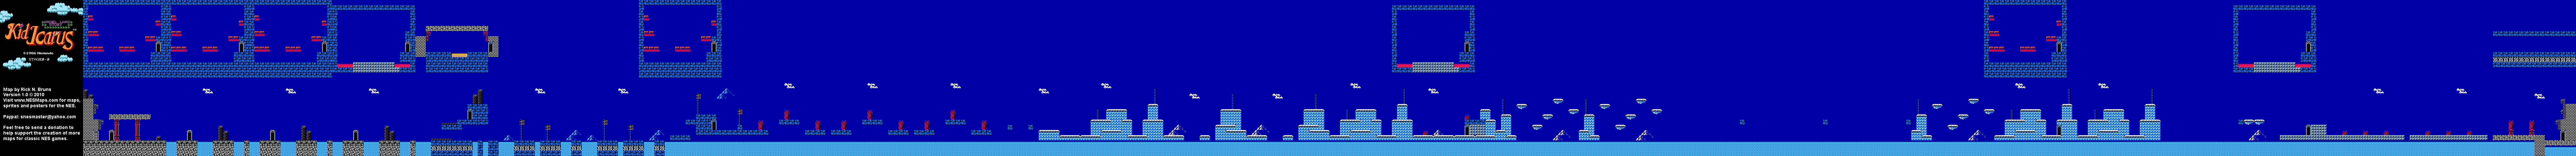 Kid Icarus - Stage 2-2 - NES Map BG